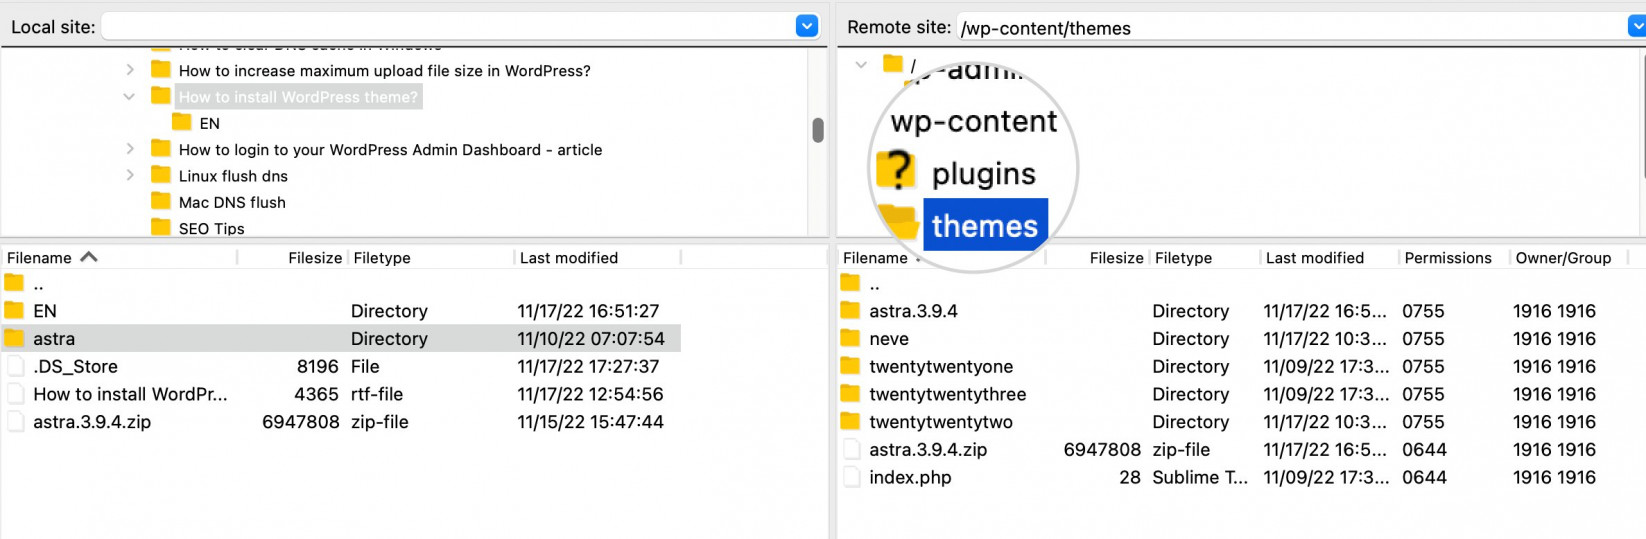 wp-content themes folder